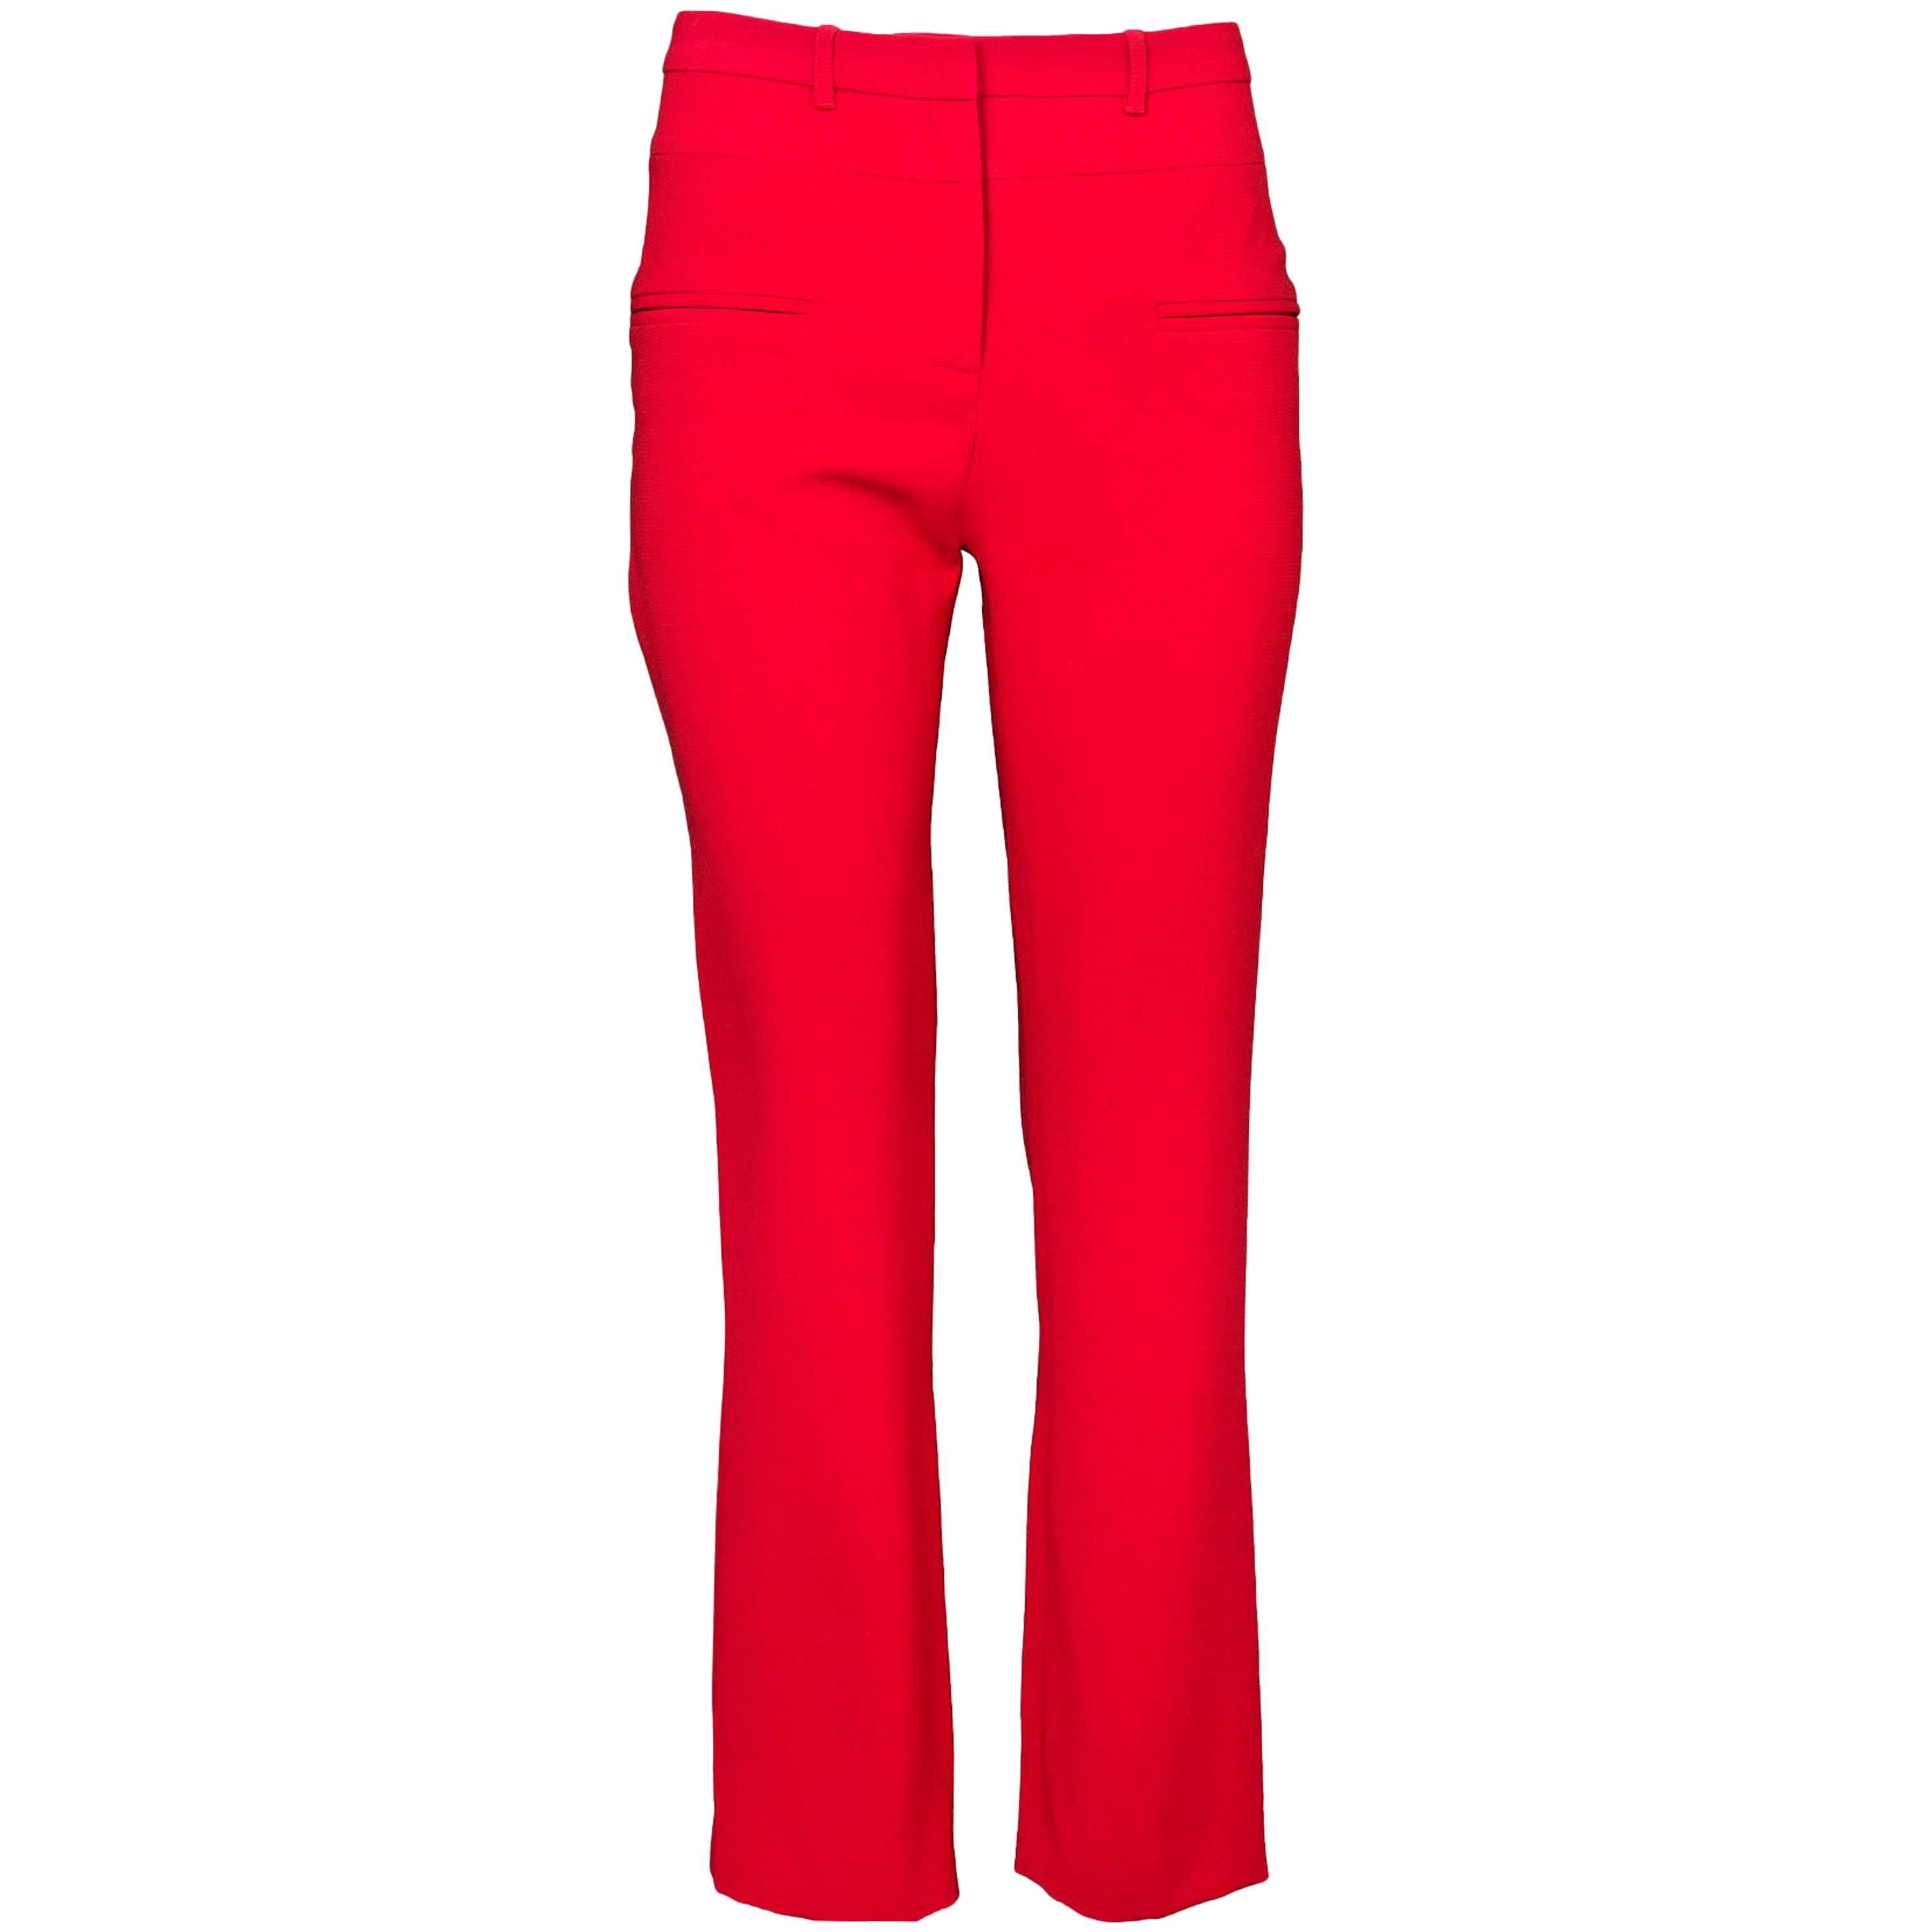 Altuzarra Red Pants Sz IT38 rt $550